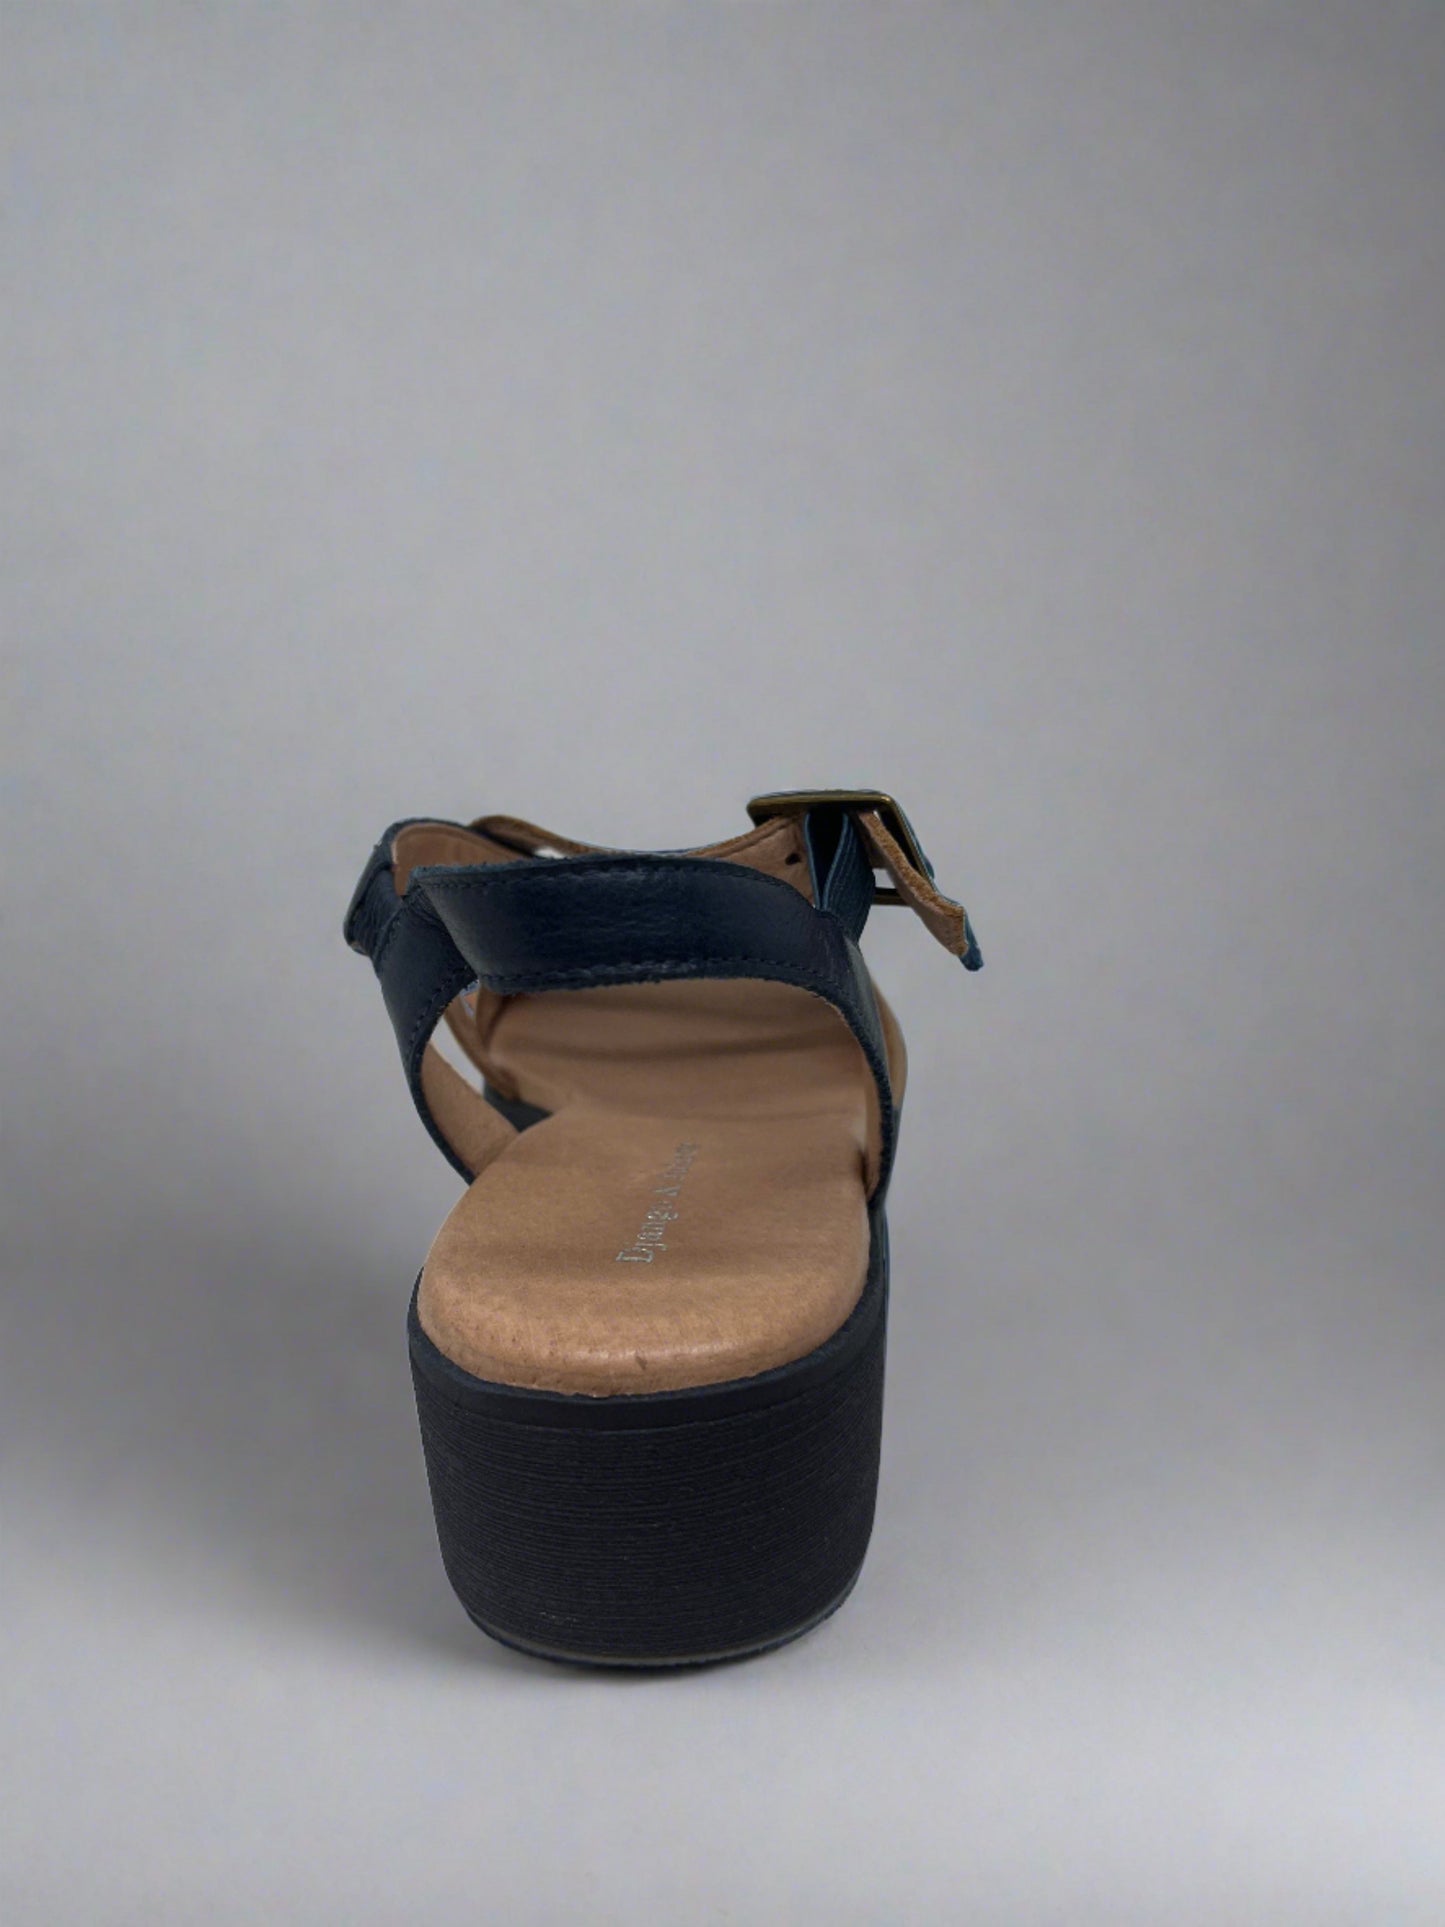 MATEDY STRAPPY SANDAL - DJANGO AND JULIETTE - 36, 37, 38, 39, 40, 41, 42, BLACK, fuchsia, NAVY, sandals, TAN, womens footwear - Stomp Shoes Darwin